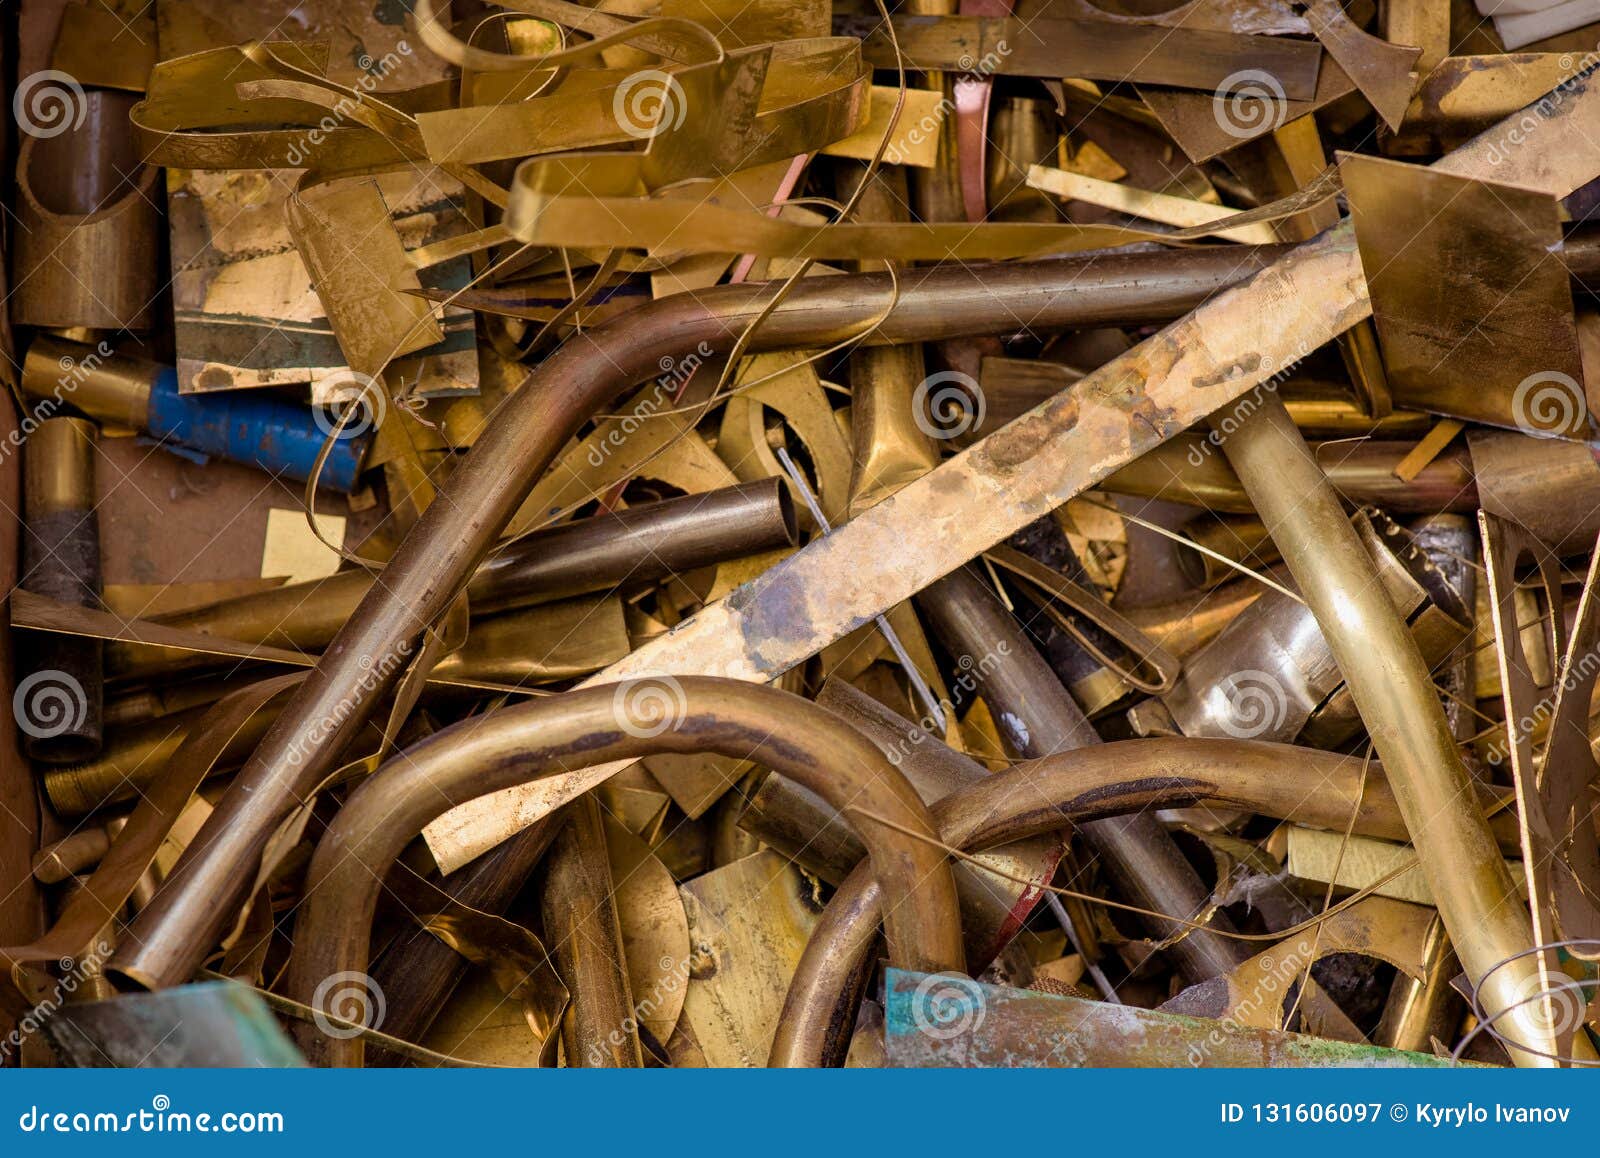 Scrap metal recycling, Polished brass scrap